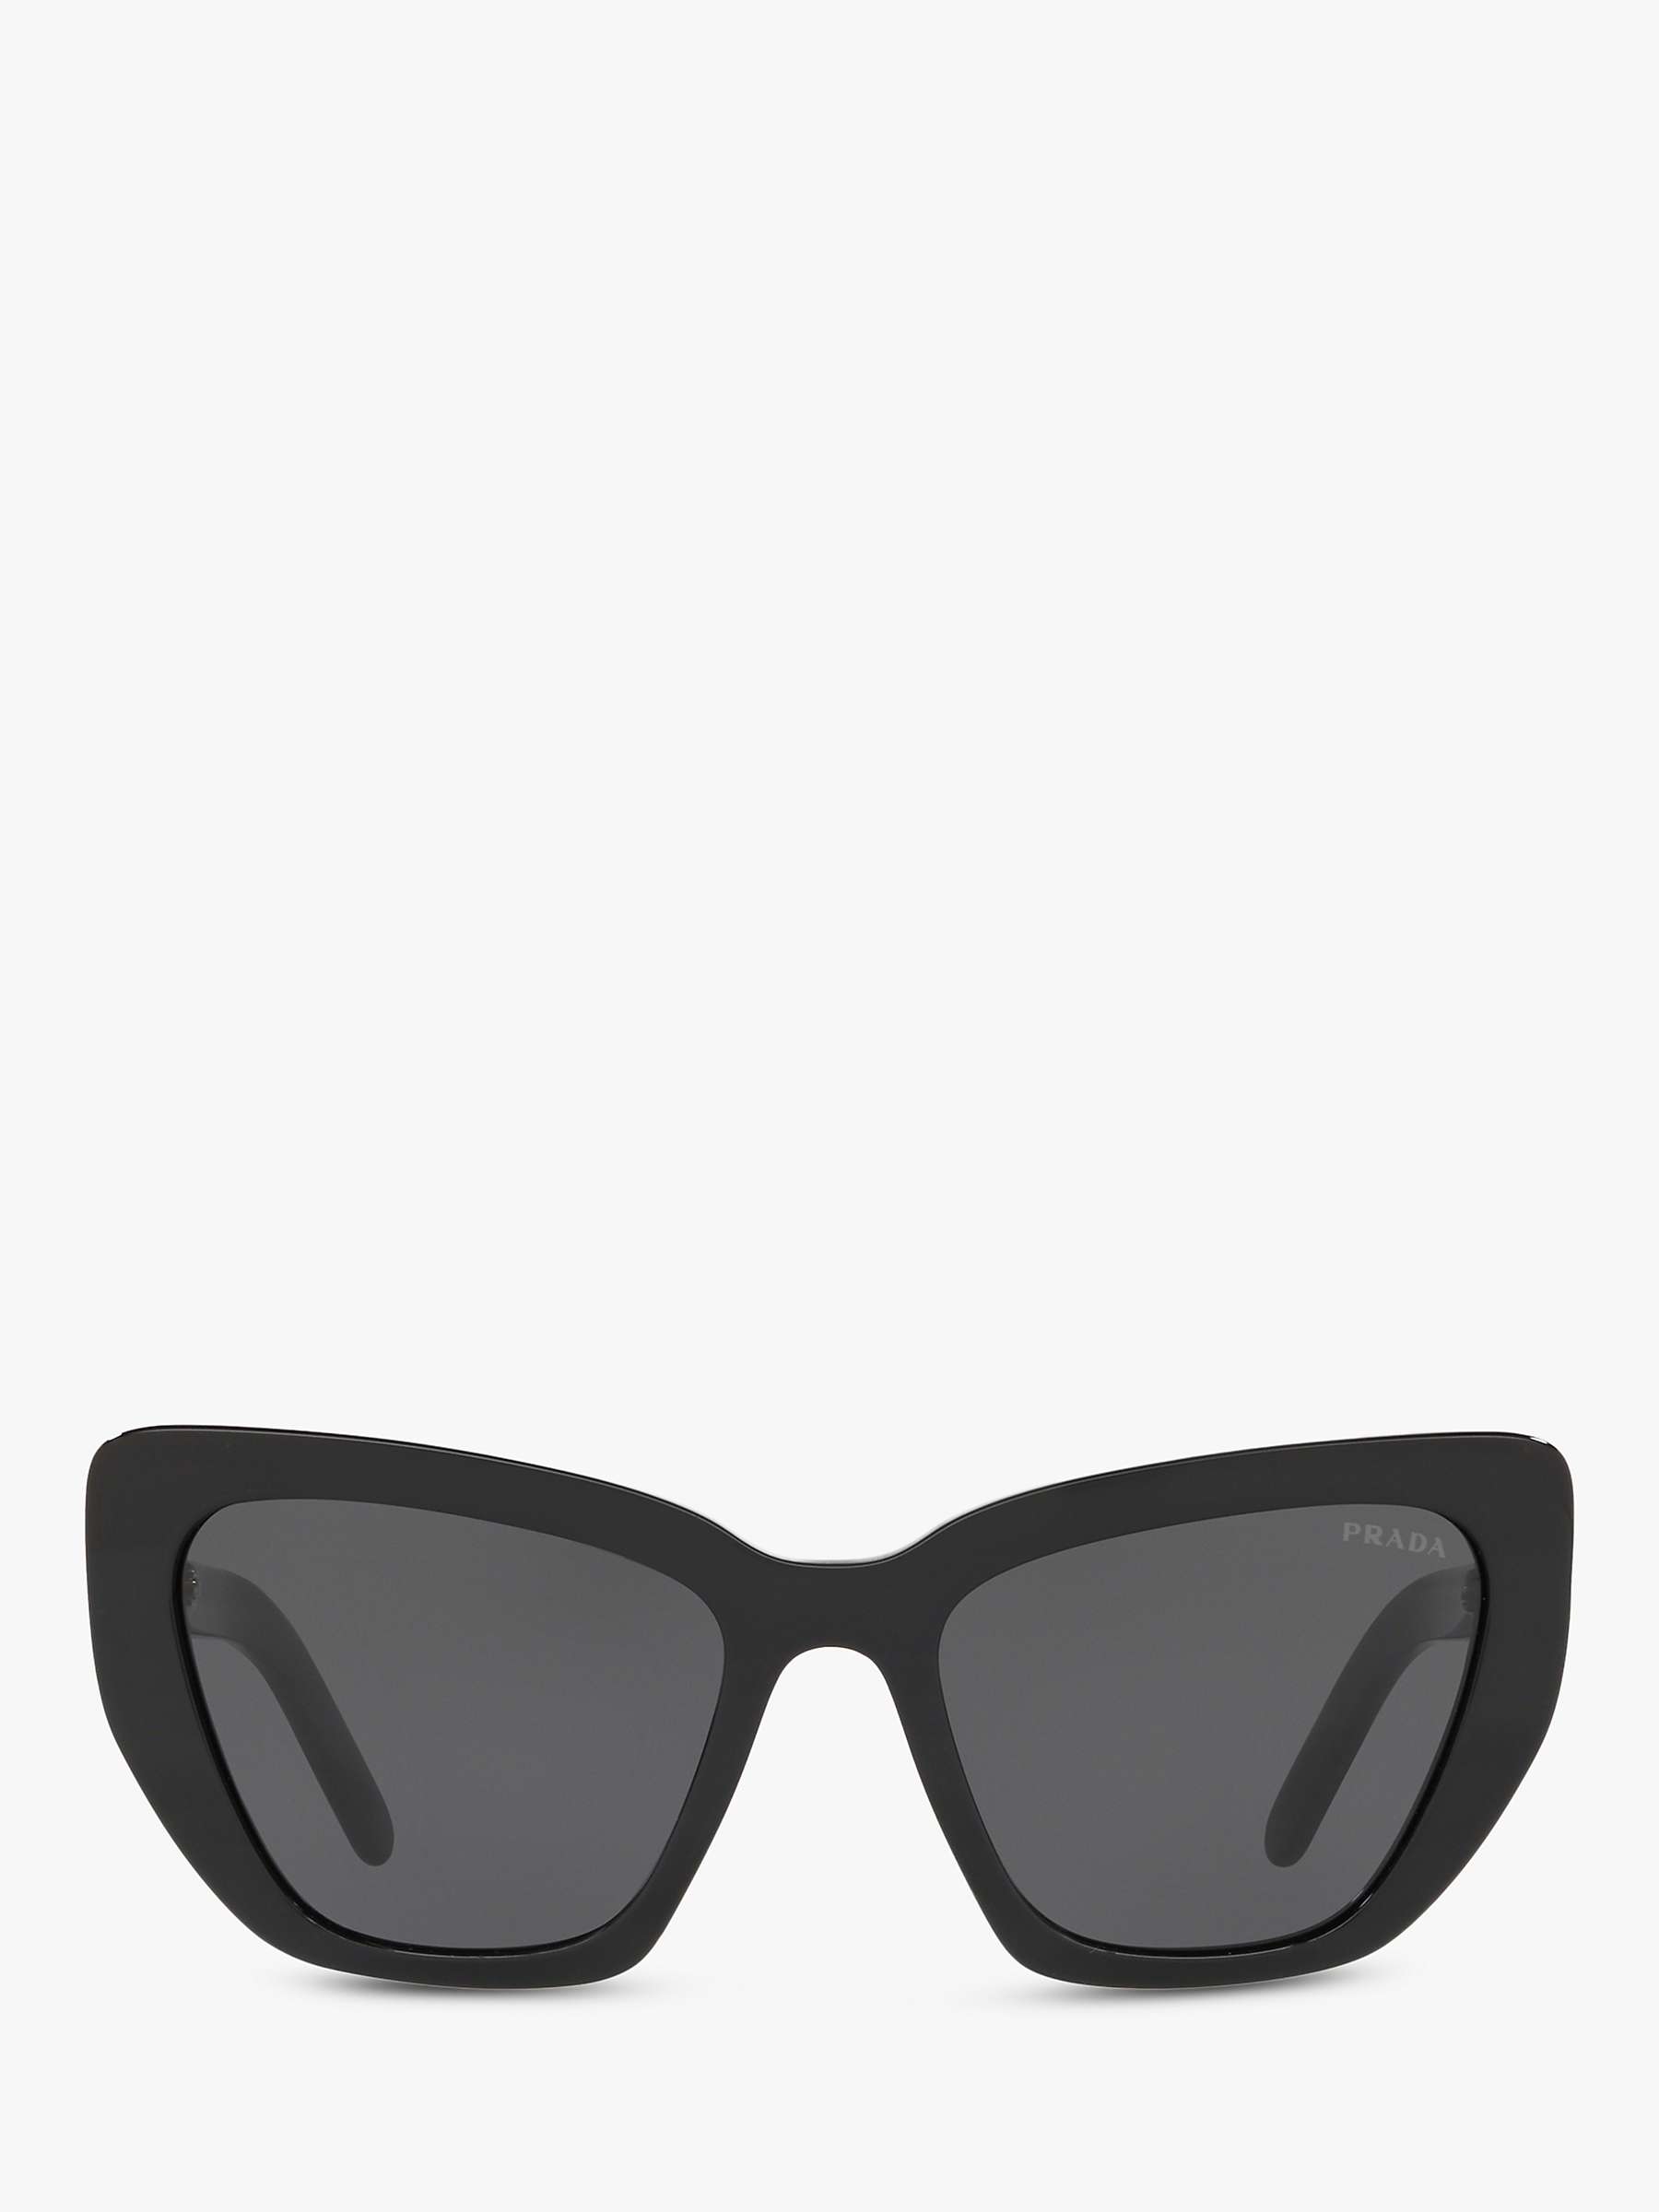 Buy Prada PR 08VS Women's Cat's Eye Sunglasses Online at johnlewis.com